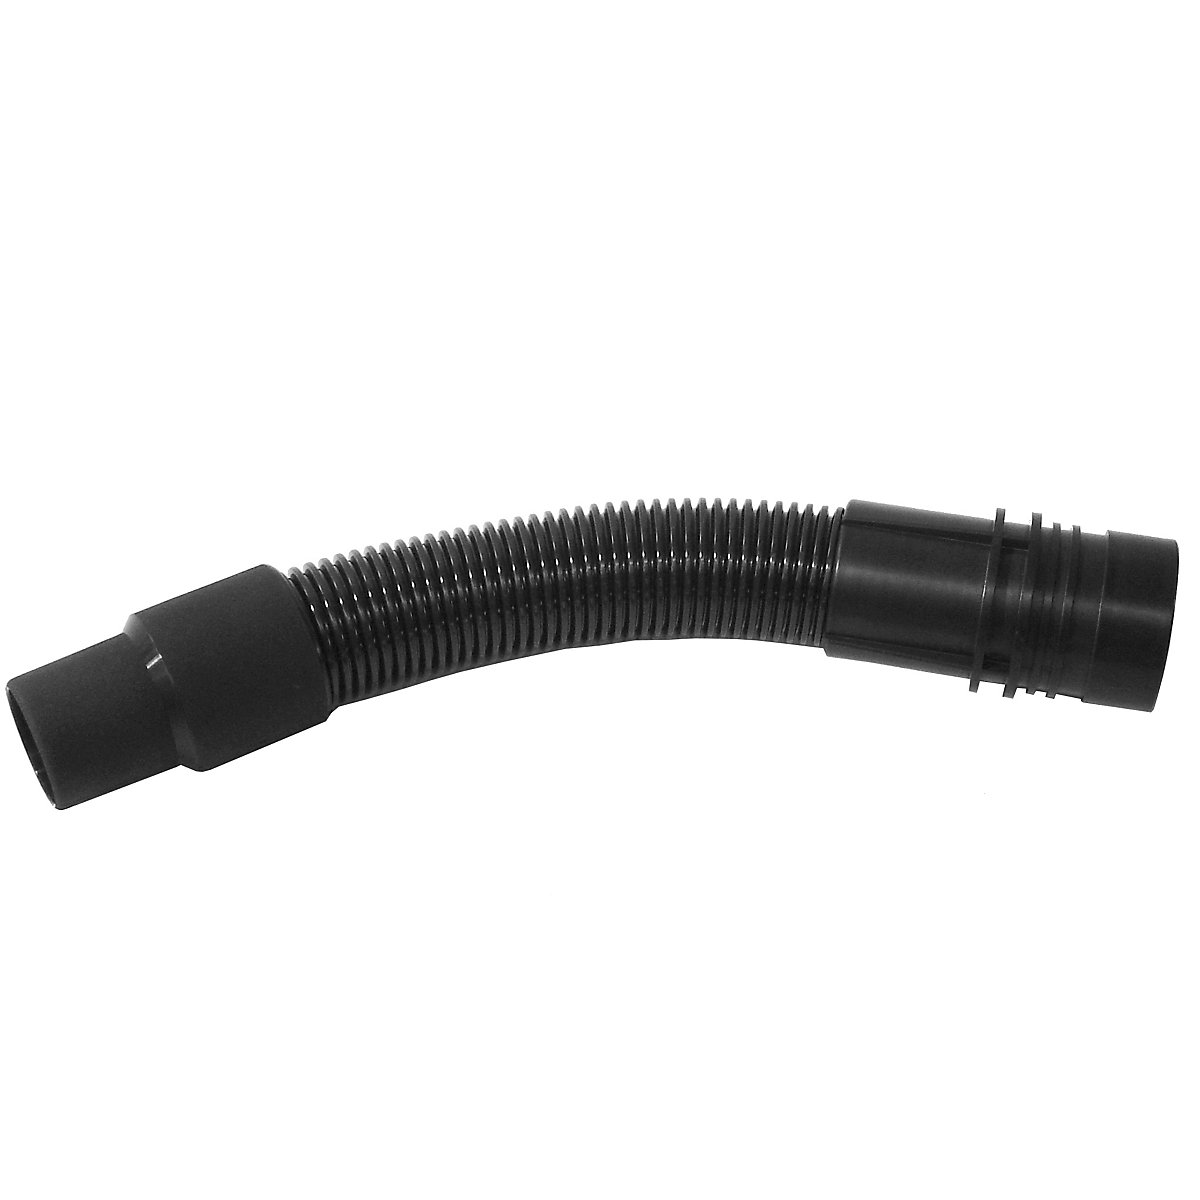 PP suction hose, standard, length 5 m-1